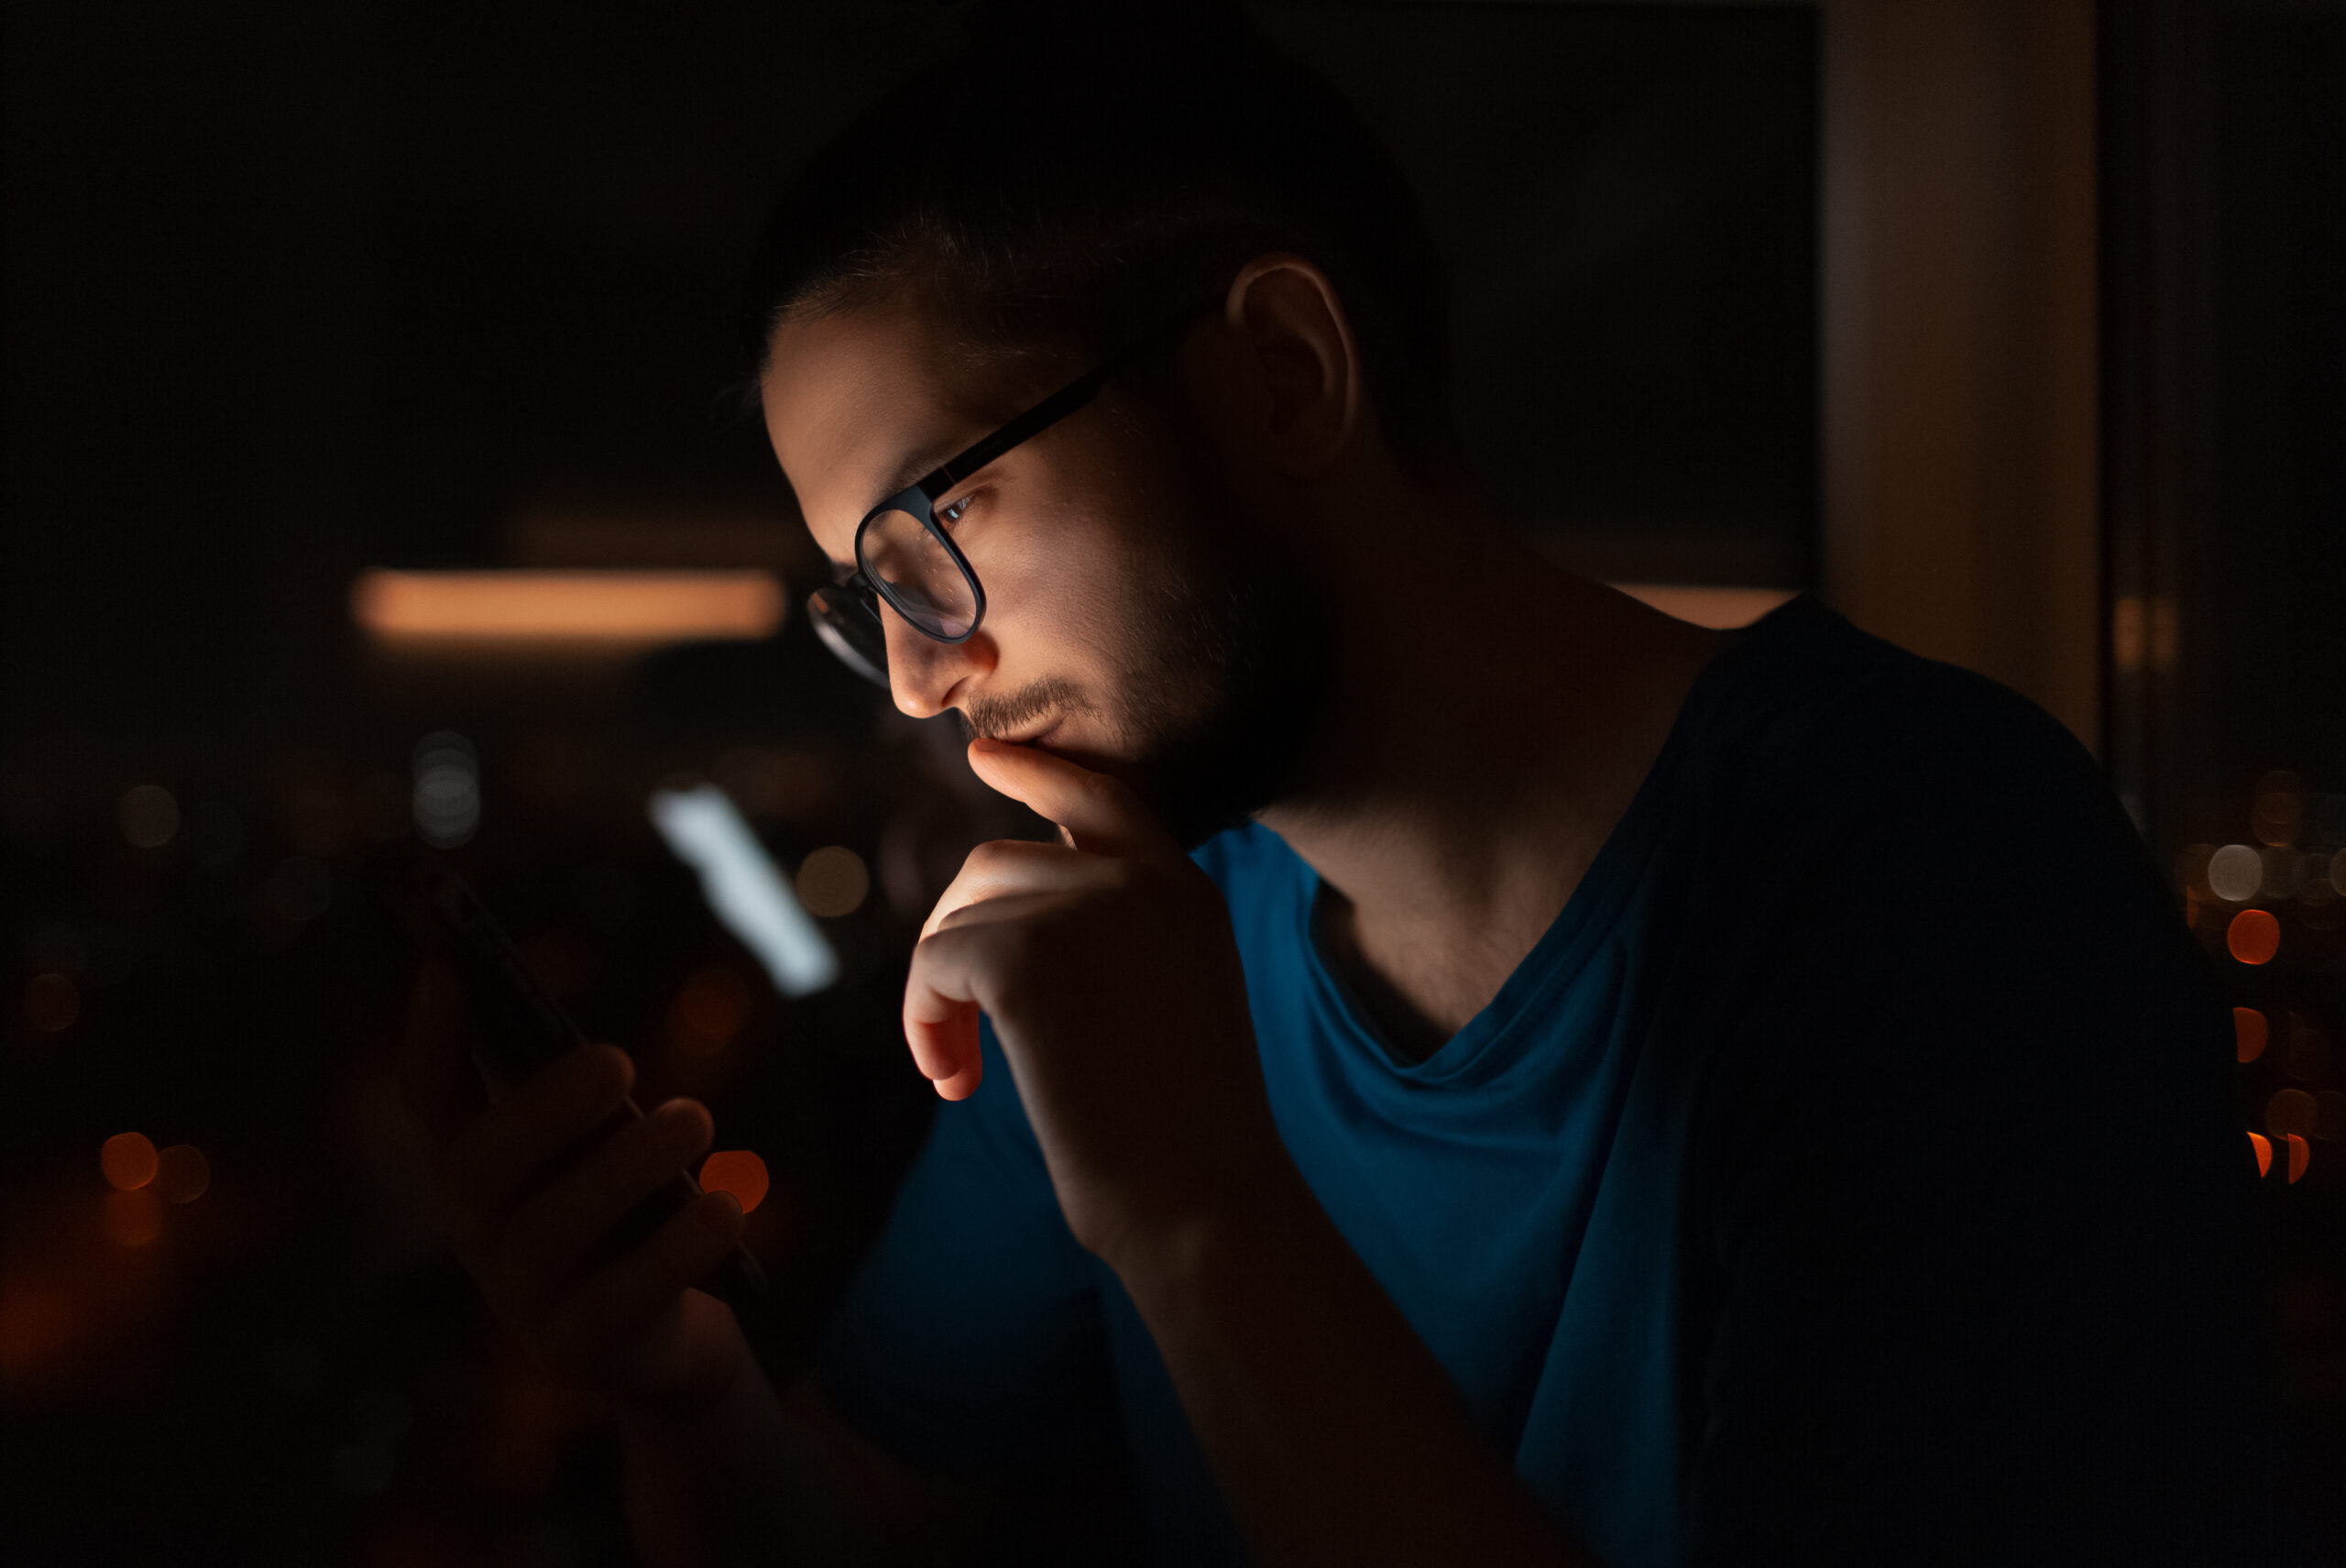 serious man looking at smartphone in dark room